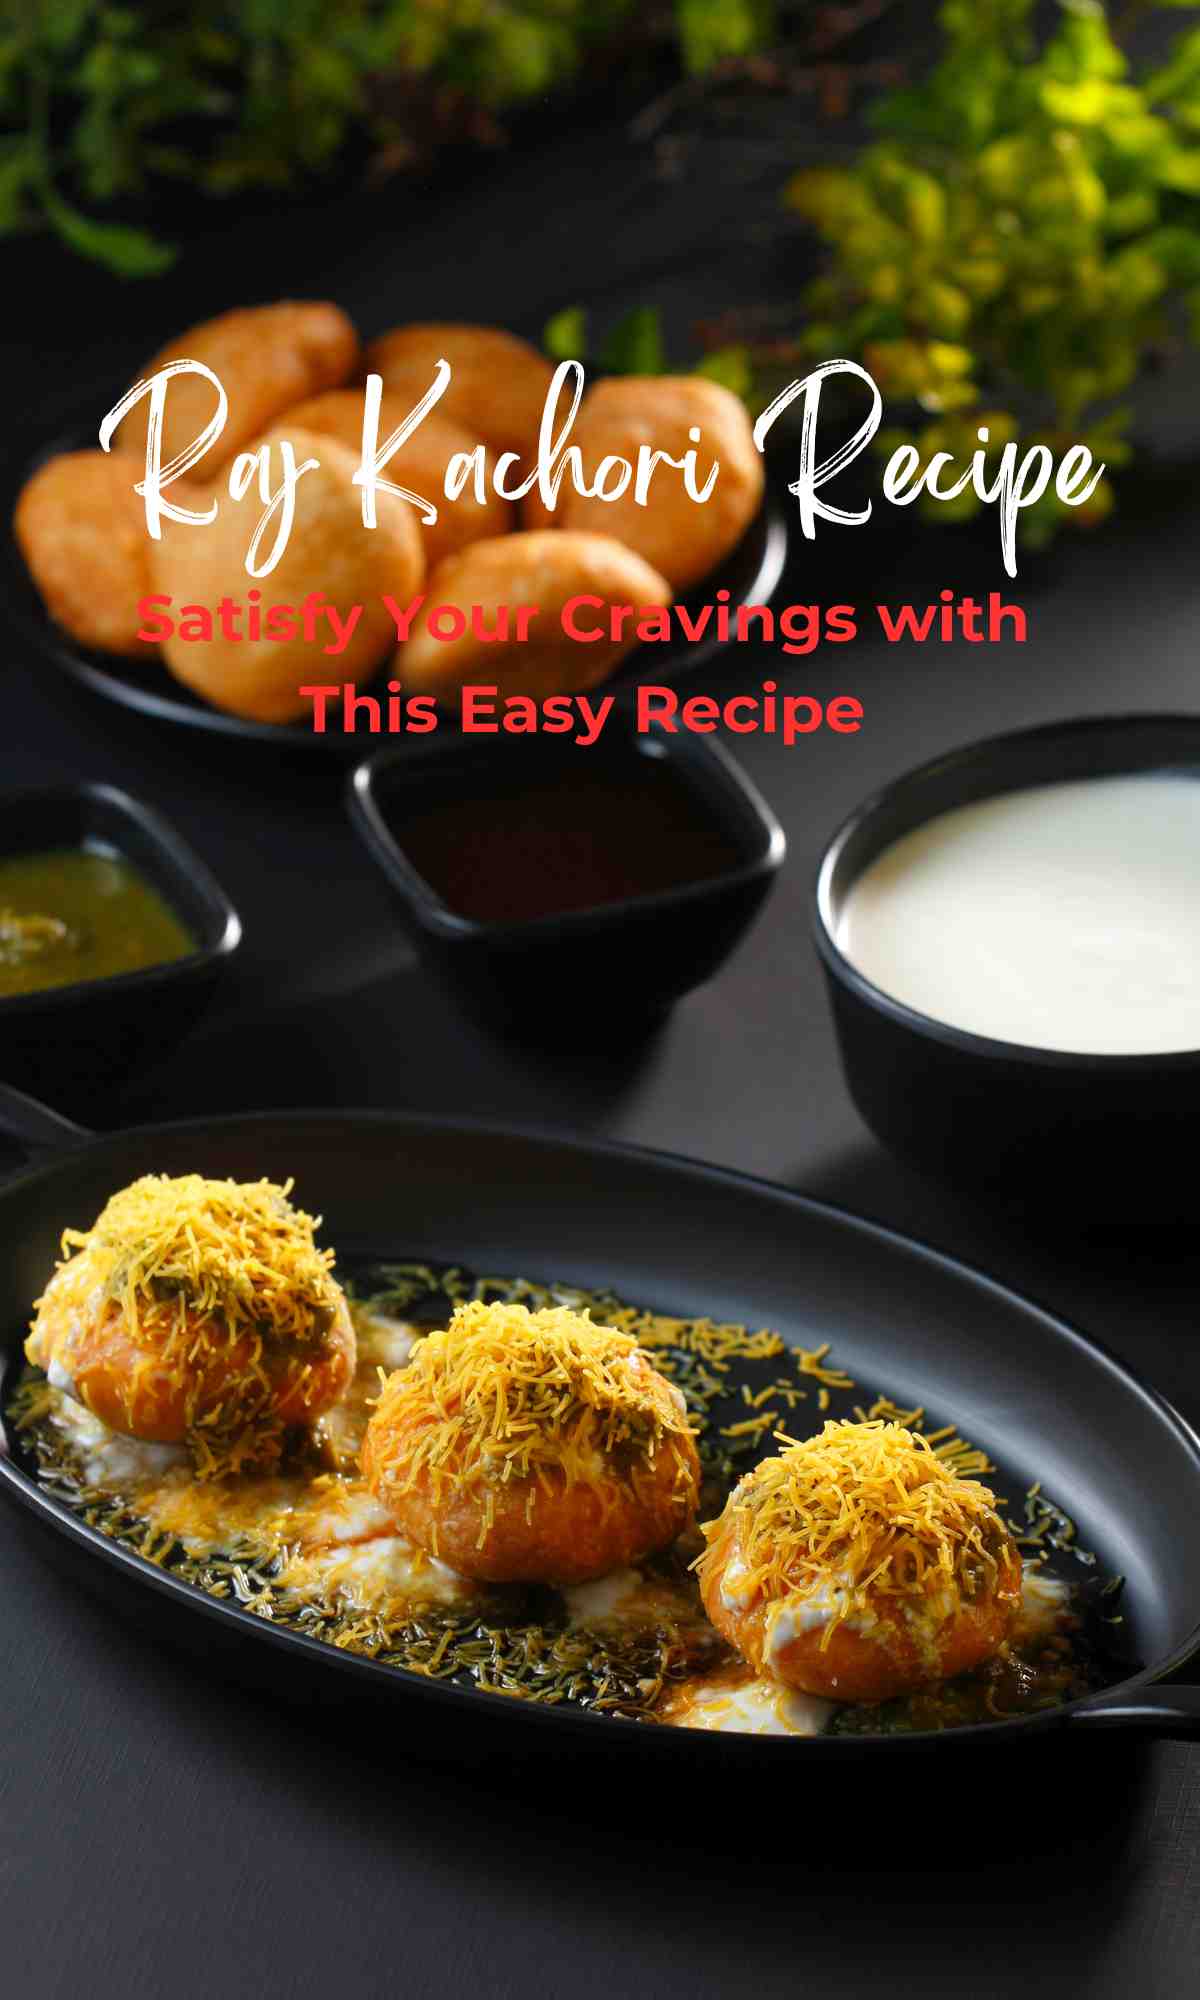 Raj Kachori Recipe